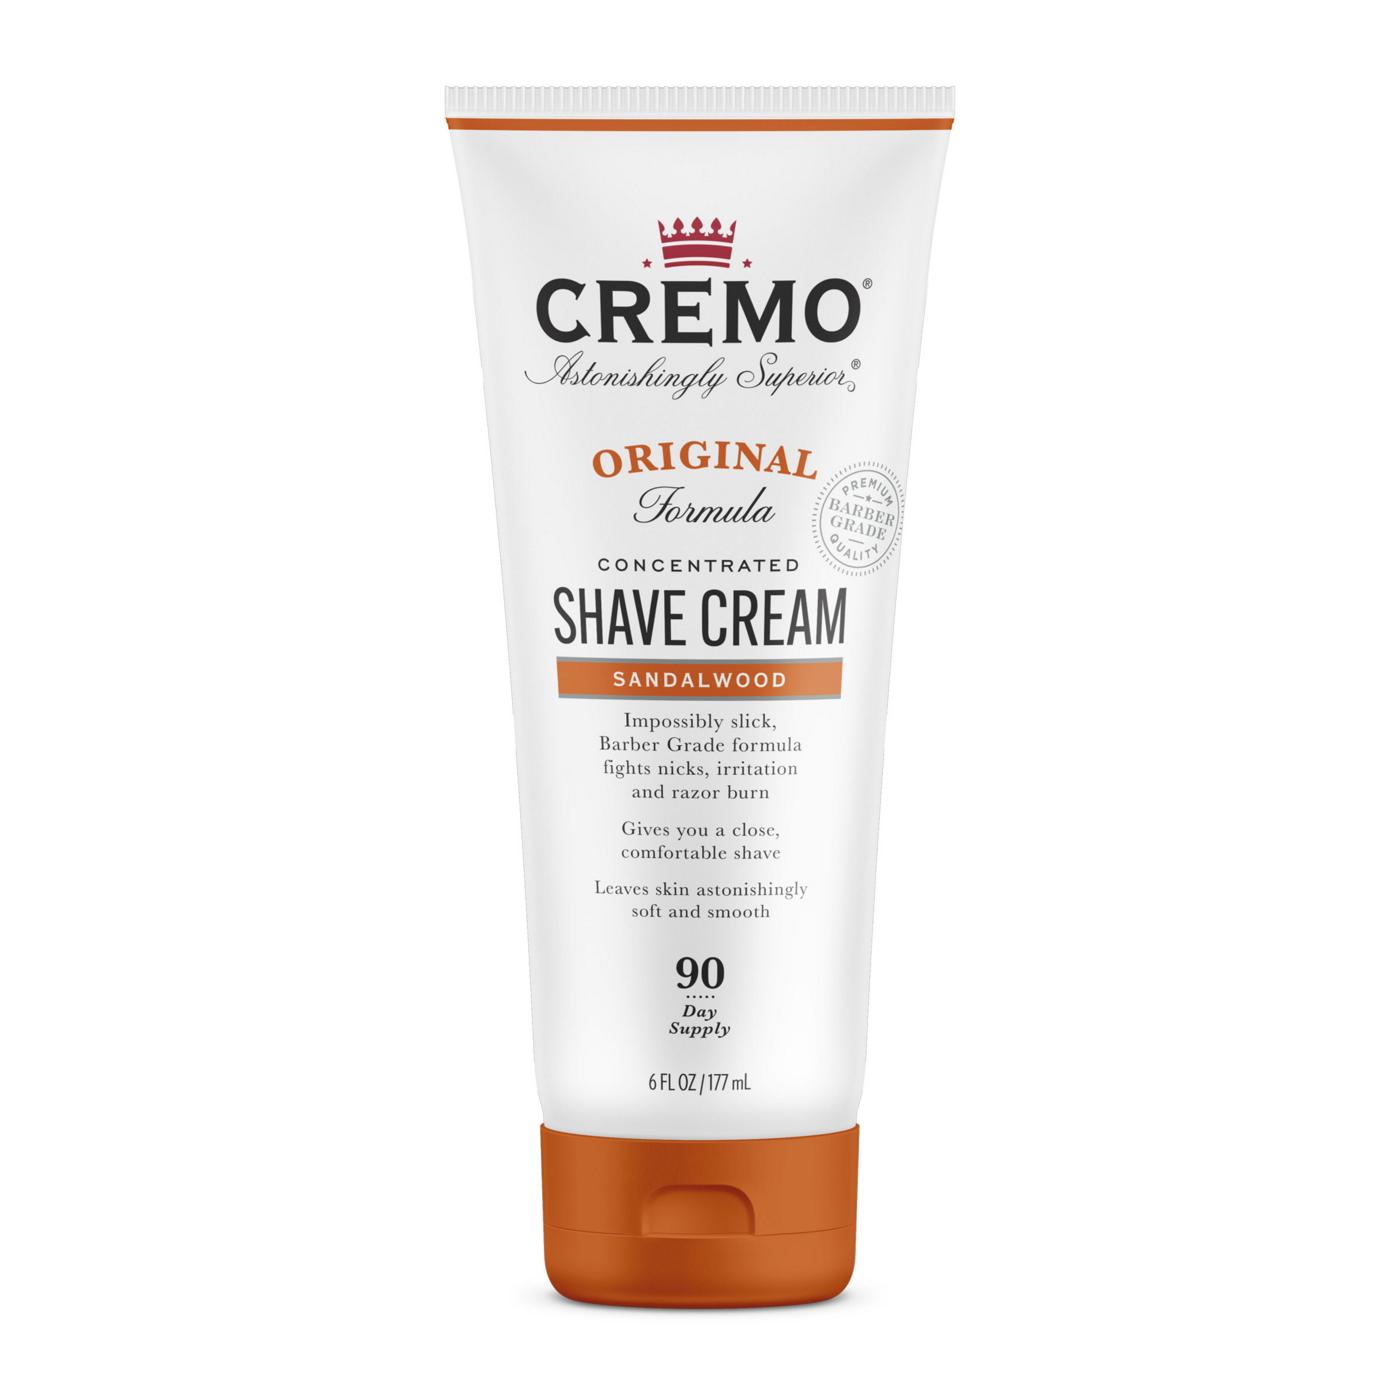 Cremo Shave Cream - Sandalwood; image 1 of 5